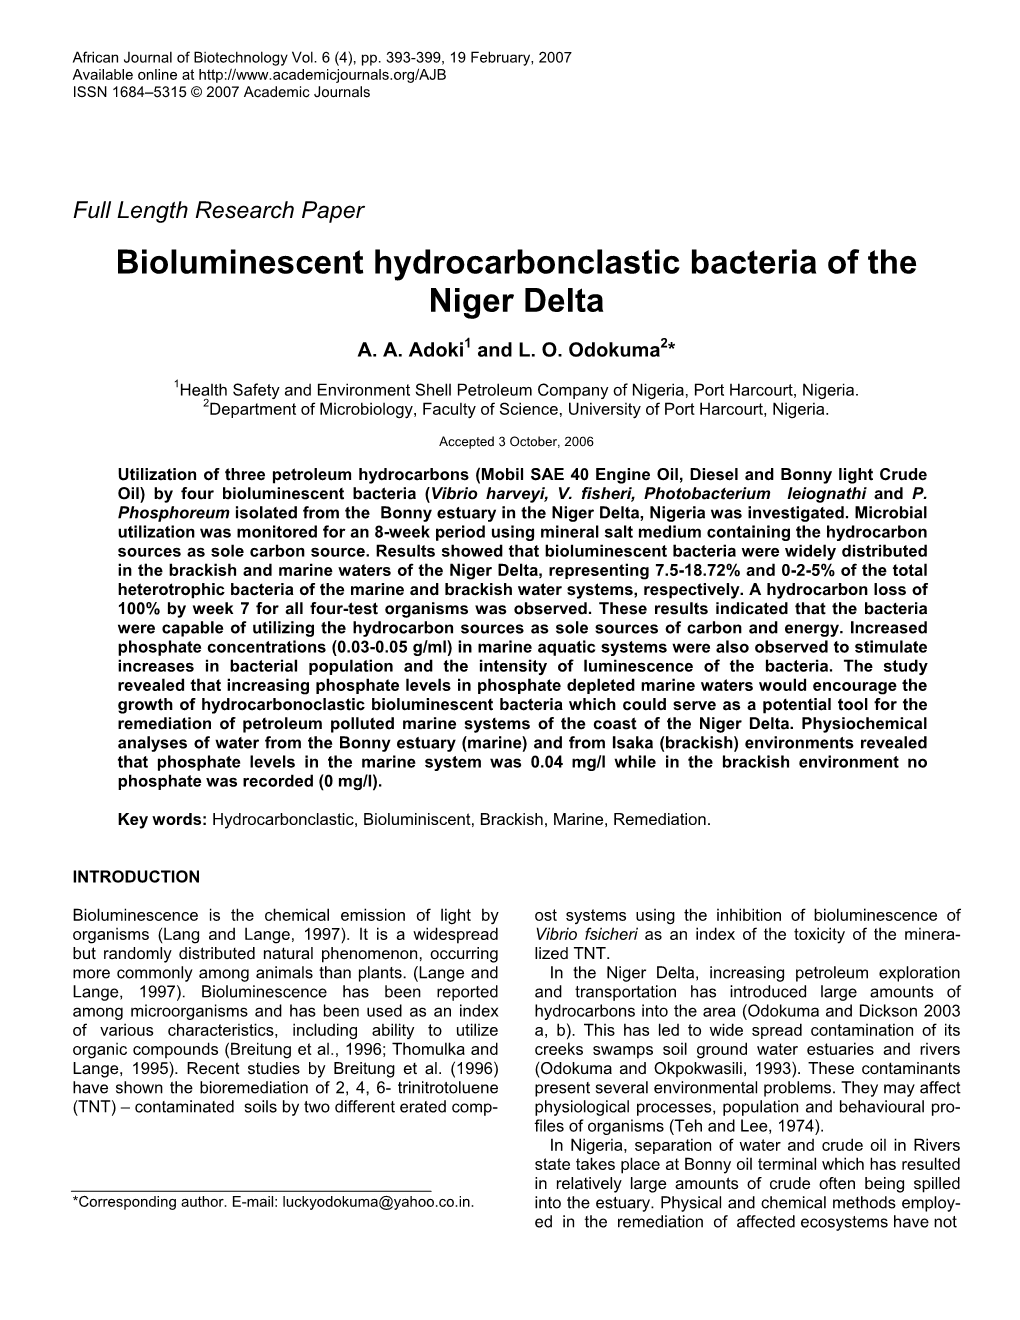 Bioluminescent Hydrocarbonclastic Bacteria of the Niger Delta